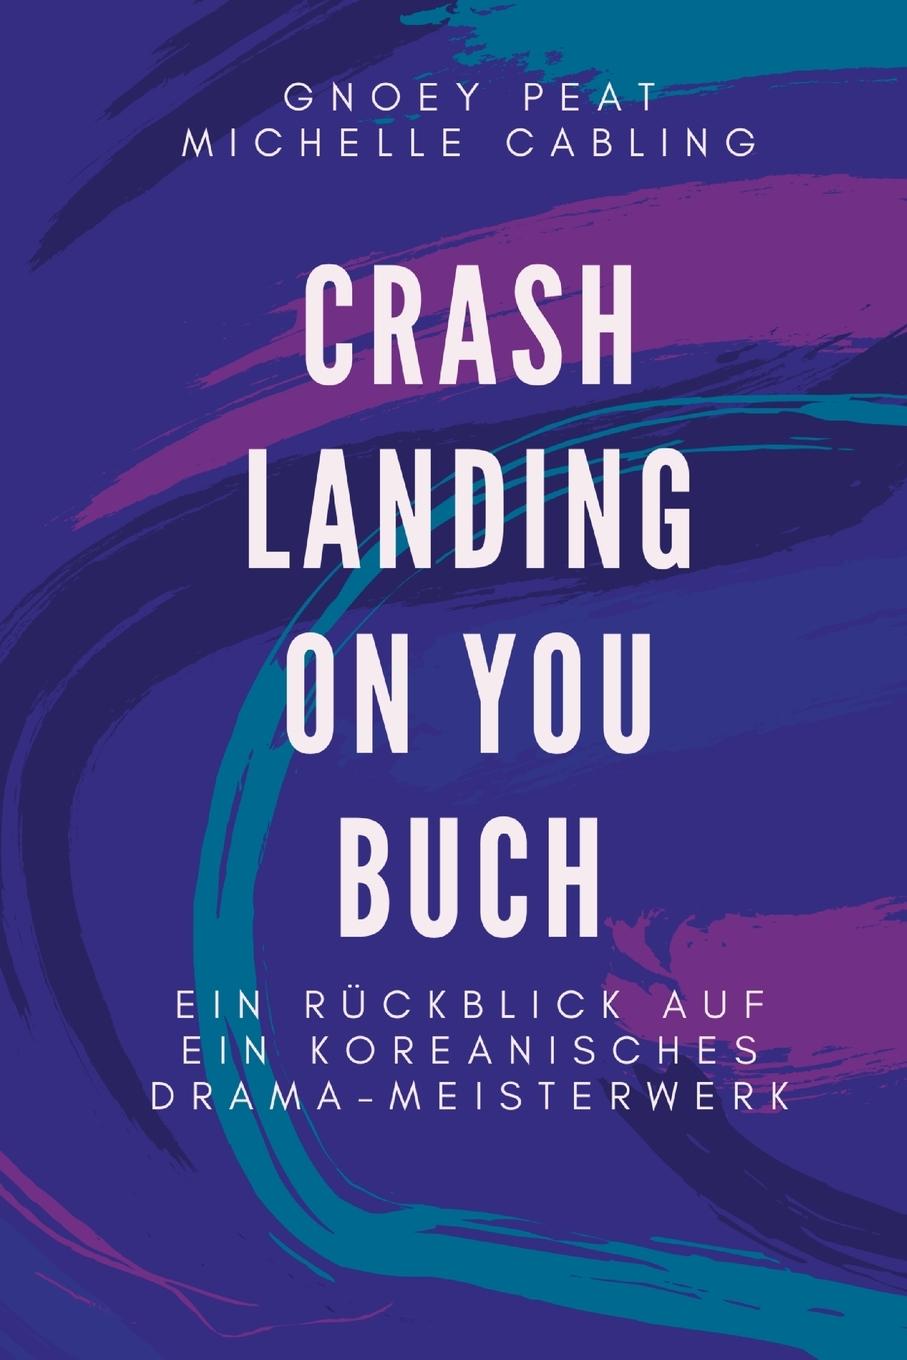 Kniha Crash Landing On You Buch Gnoey Peat